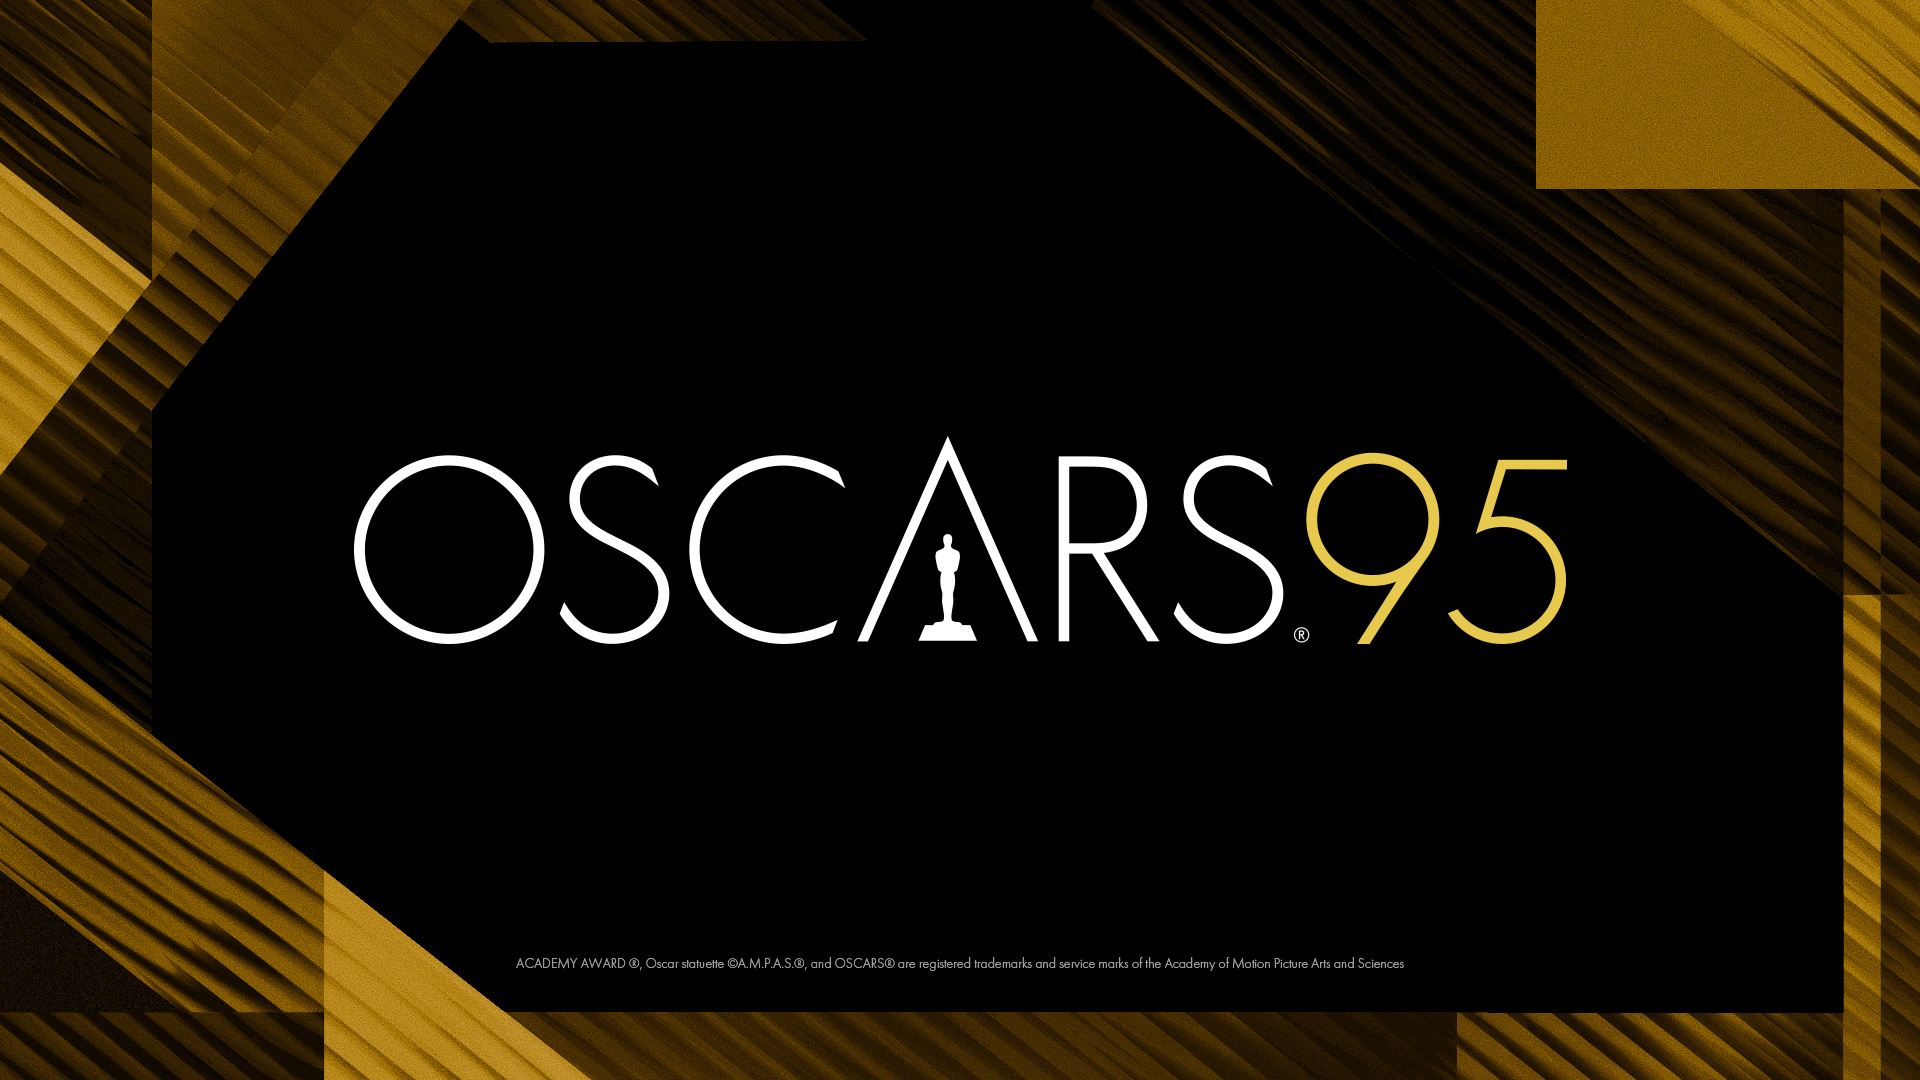 https://pl.canalplus.com/blog/wp/wp-content/uploads/Oscars_2023.jpg